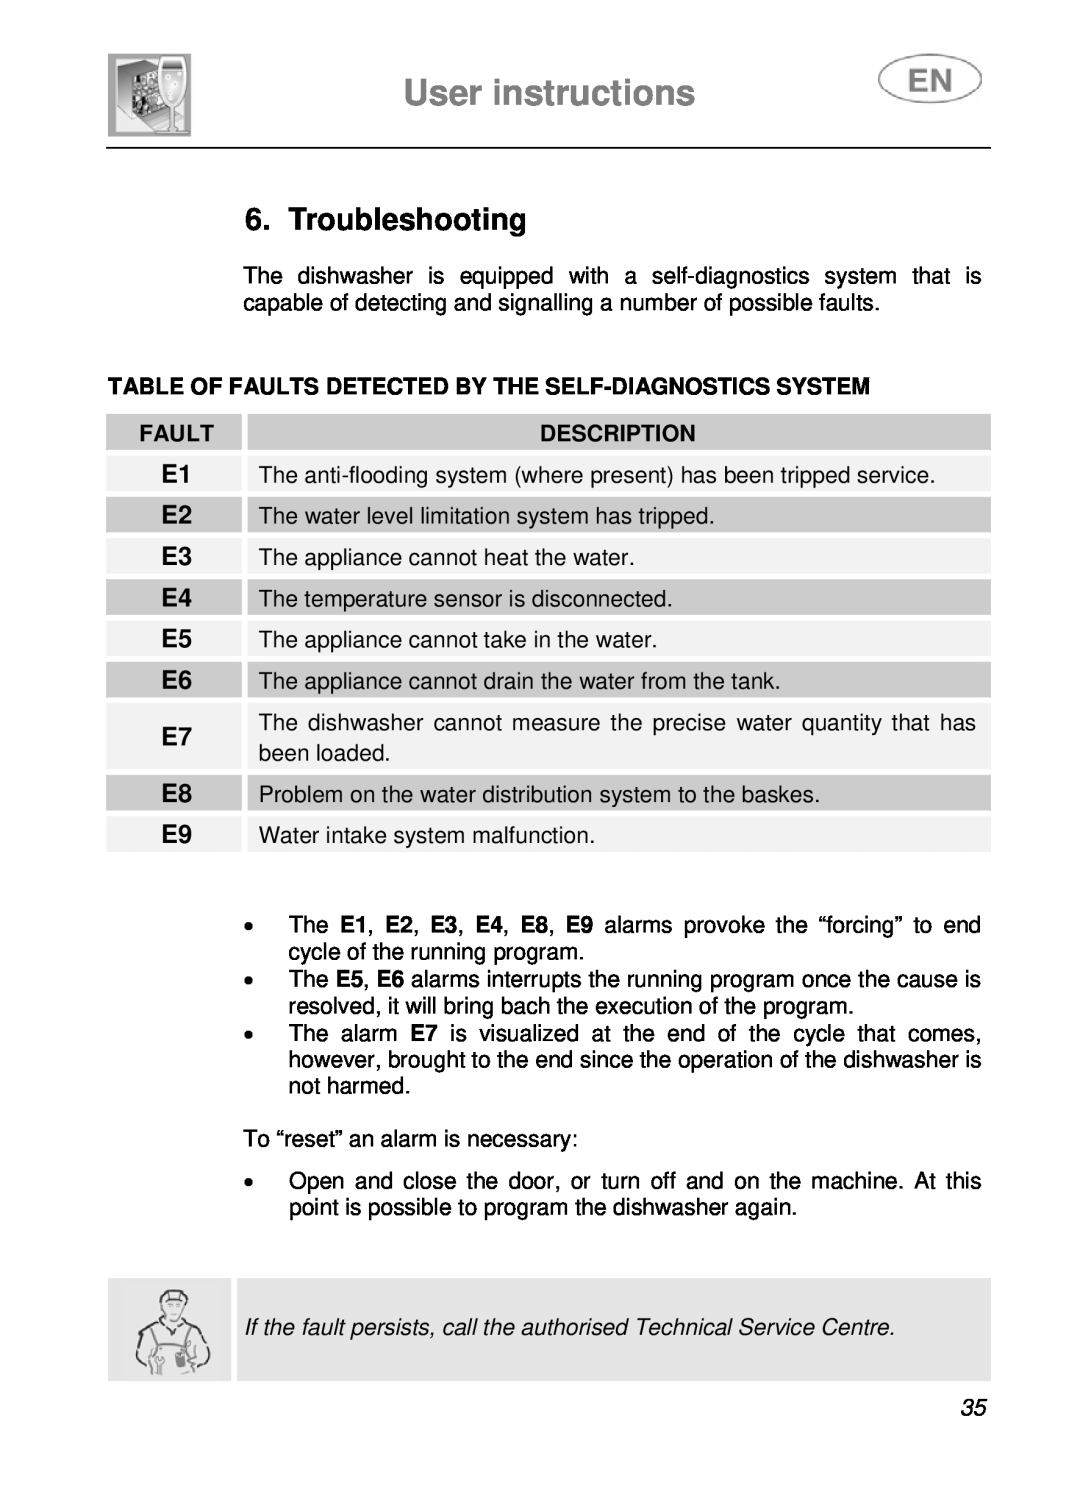 Smeg LVS1449B instruction manual Troubleshooting, User instructions, E1 E2 E3 E4 E5 E6 E7 E8 E9, Fault, Description 